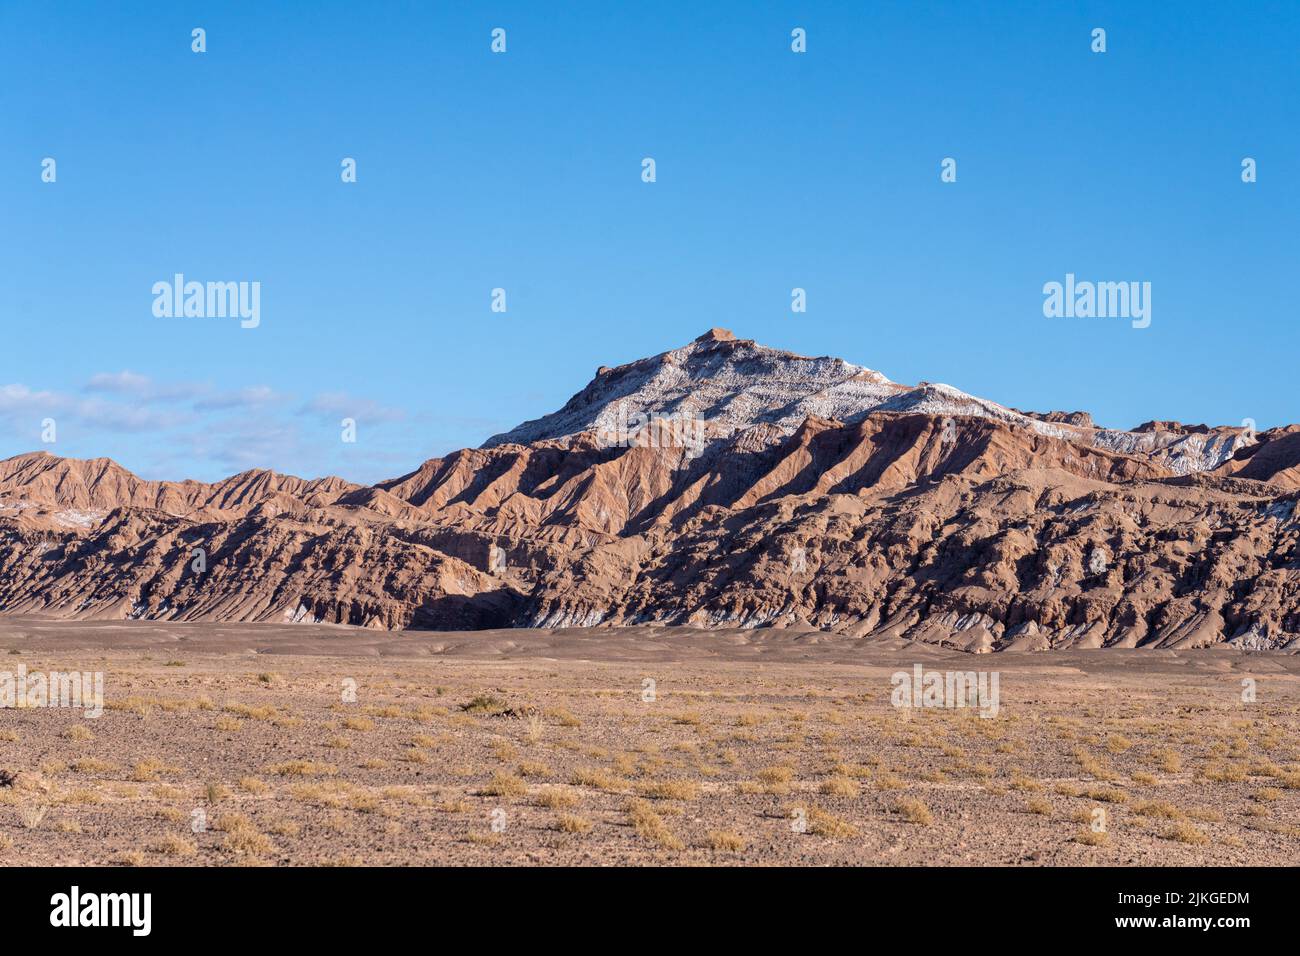 Salt deposits on the Salt Mountains in the Valley of the Moon or Valle de Luna near San Pedro de Atacama, Chile. Stock Photo